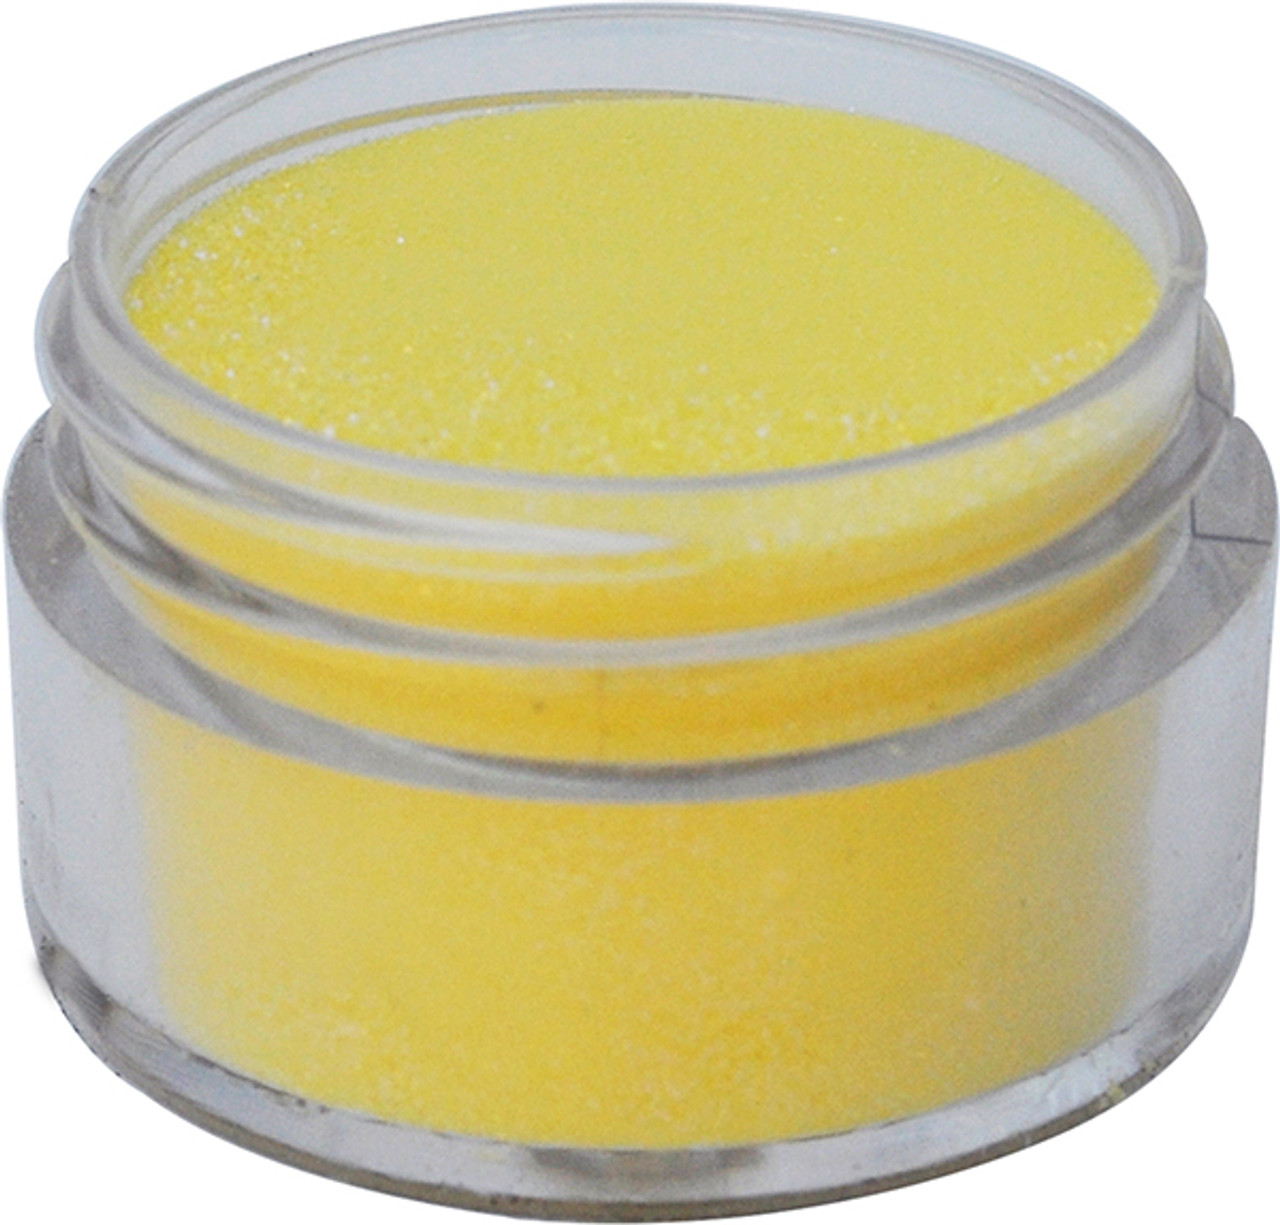 U2 GLITTER Color Powders - Yellow -  1 lb